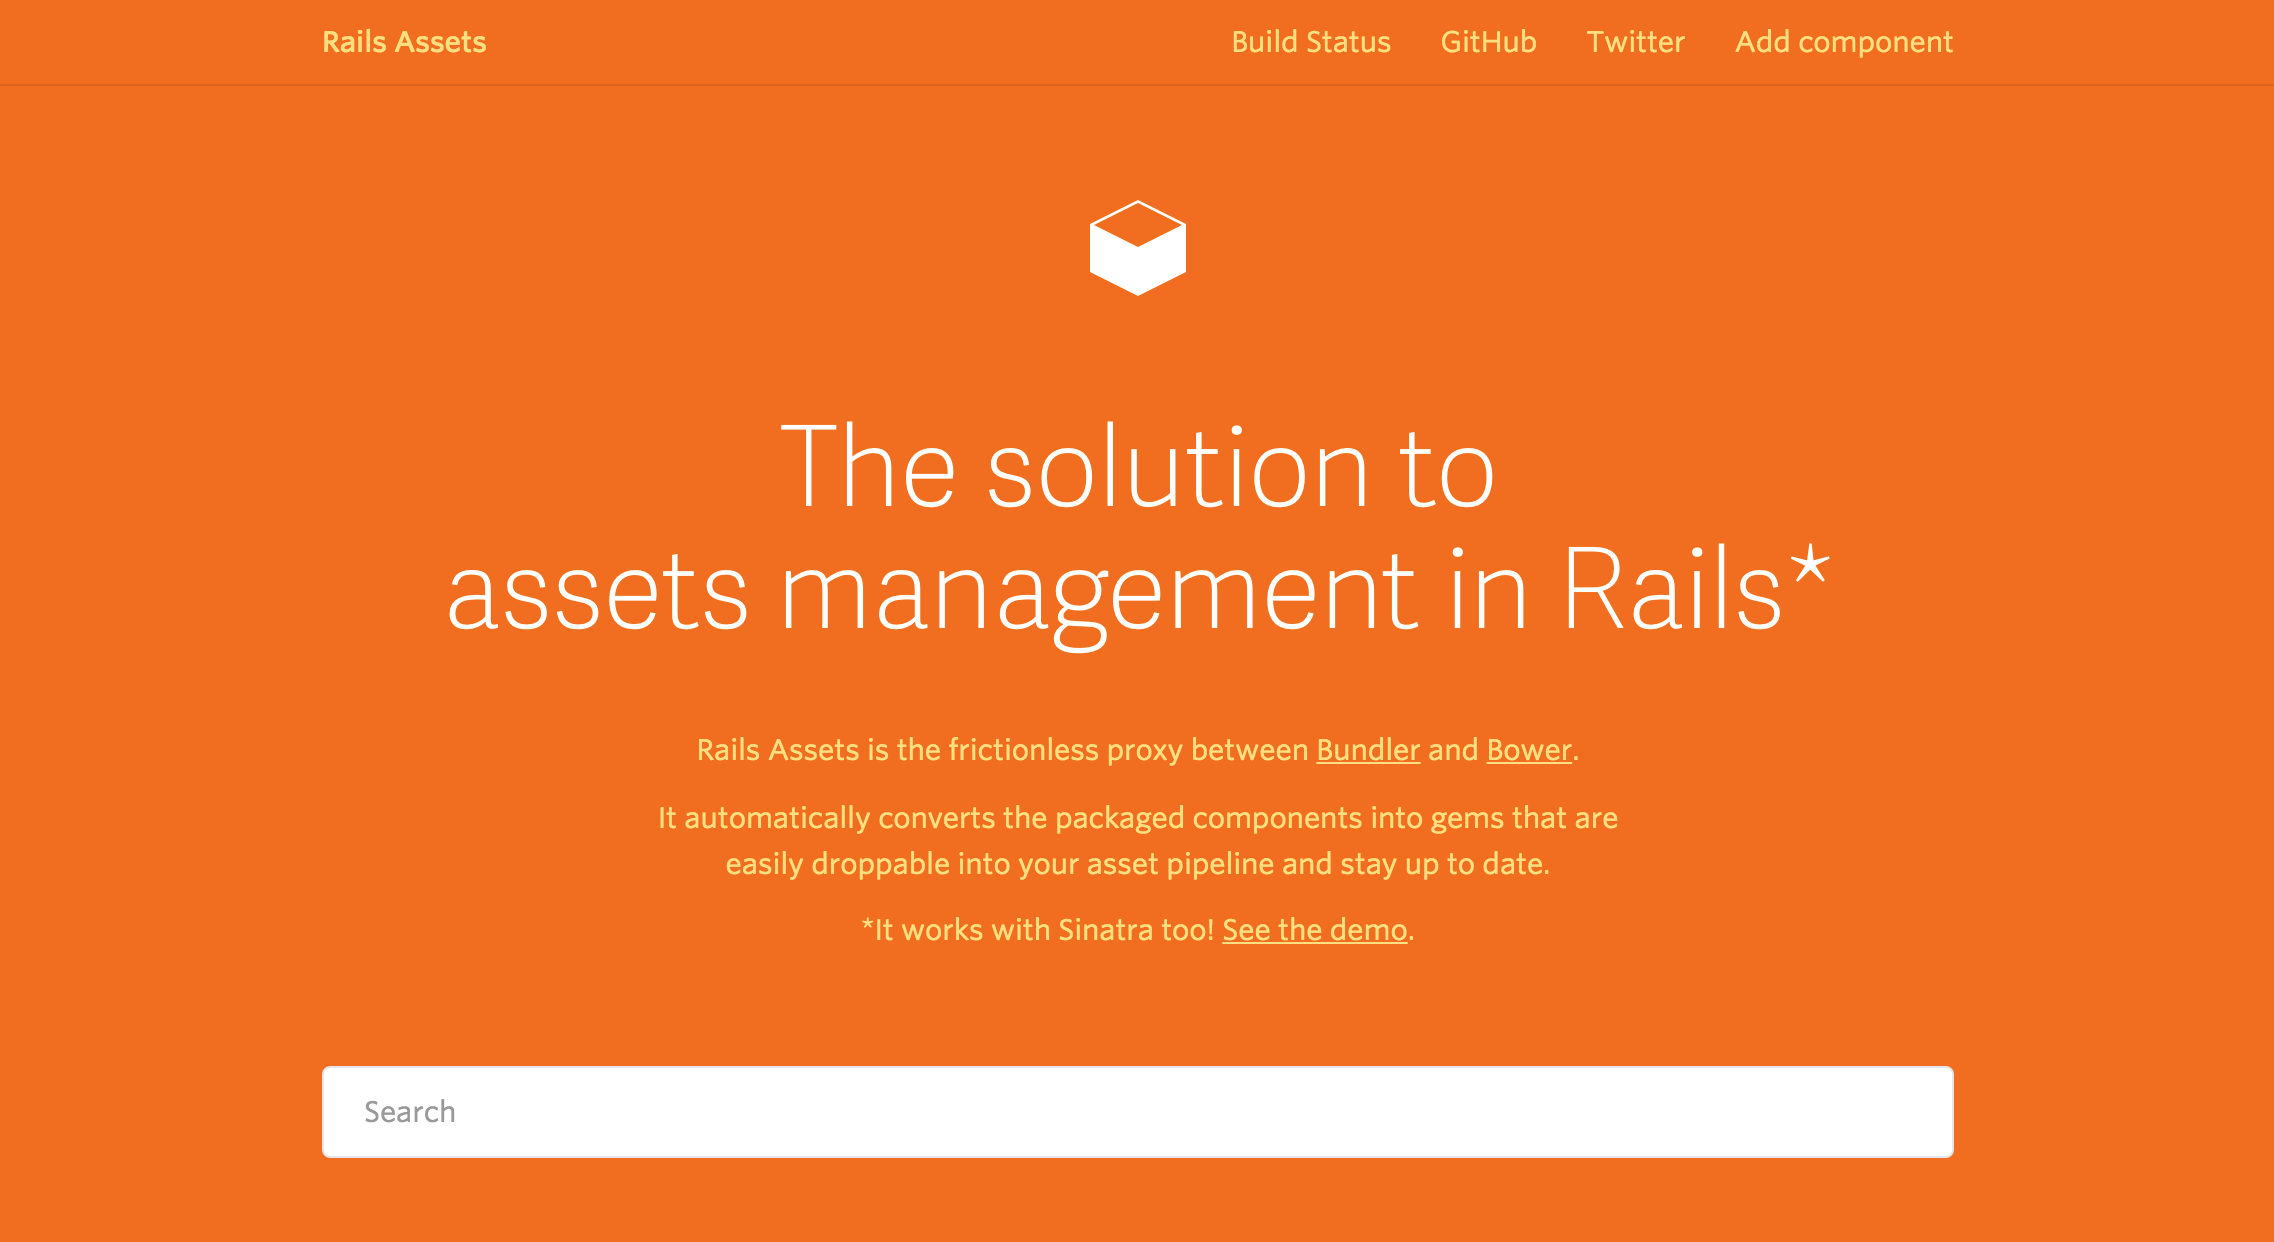 Rails Assets